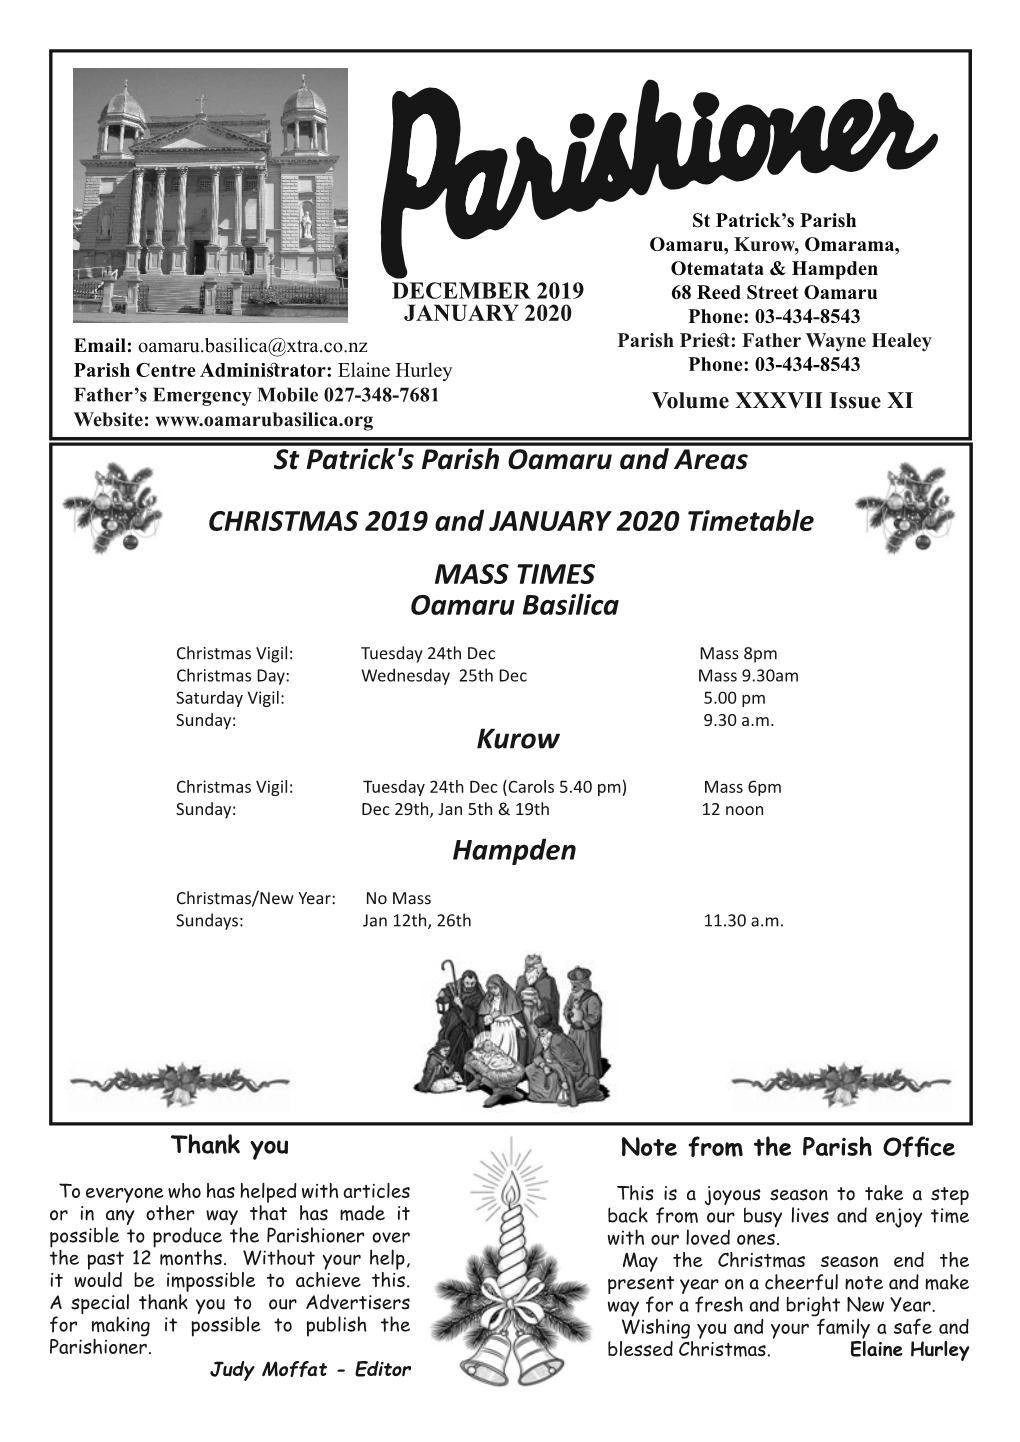 St Patrick's Parish Oamaru and Areas CHRISTMAS 2019 and JANUARY 2020 Timetable MASS TIMES Oamaru Basilica